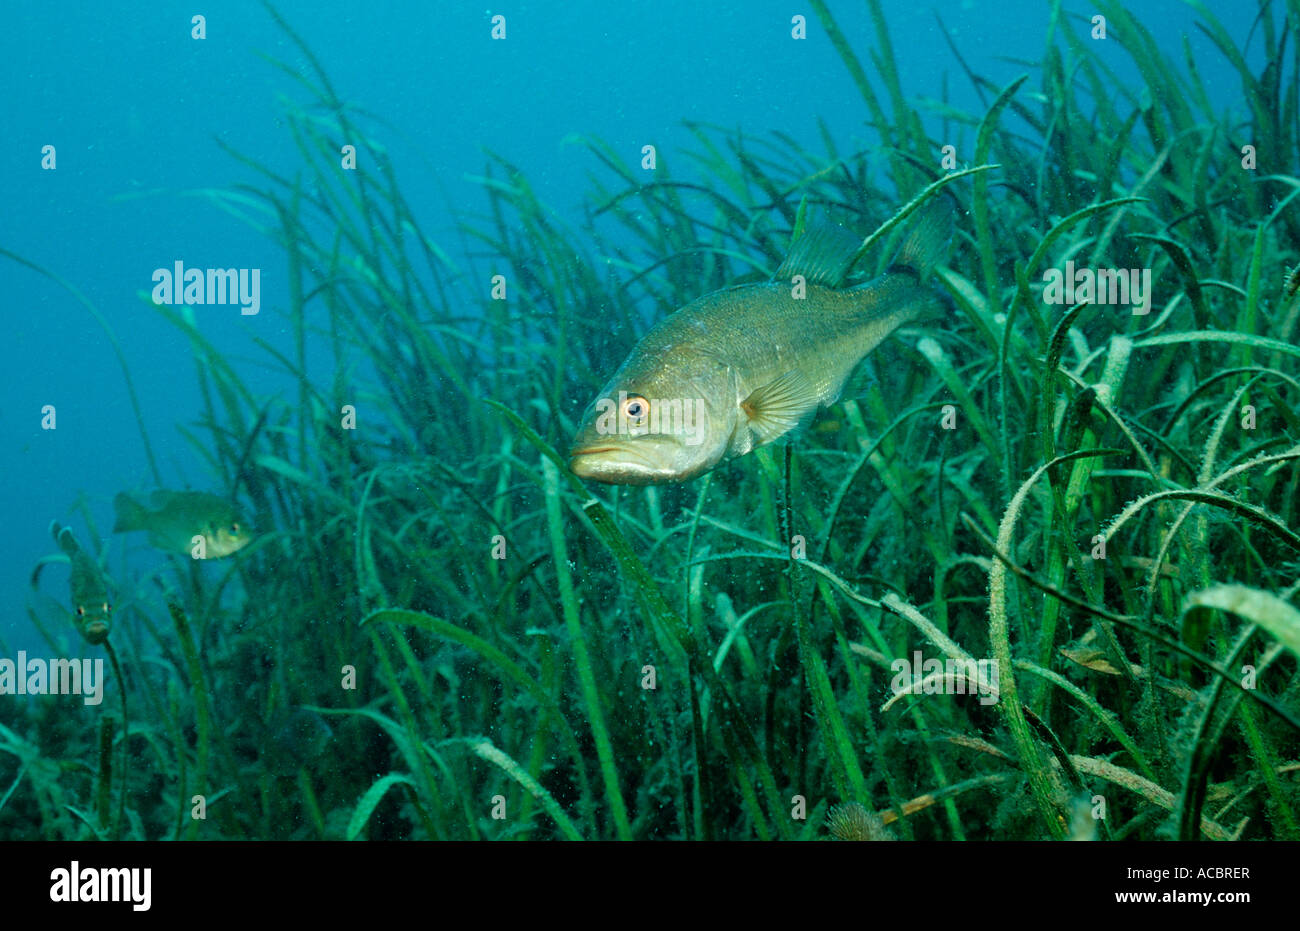 Largemouth bass Micropterus salmoides USA Florida FL Stock Photo